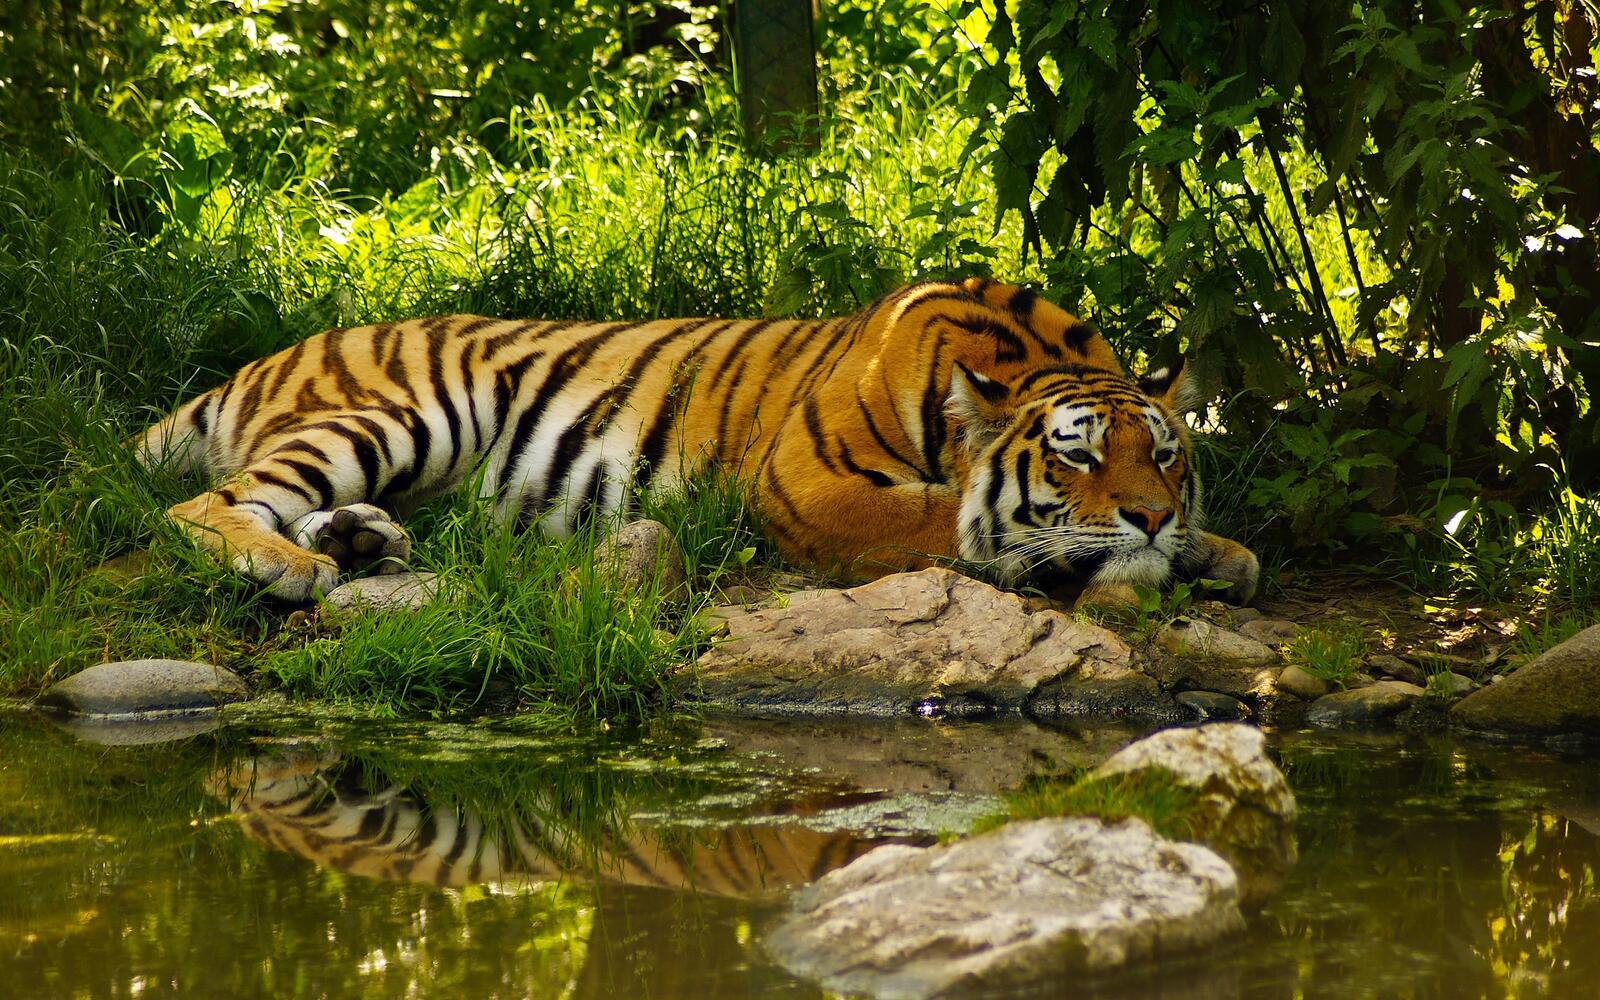 Wallpapers animals tiger wildlife on the desktop